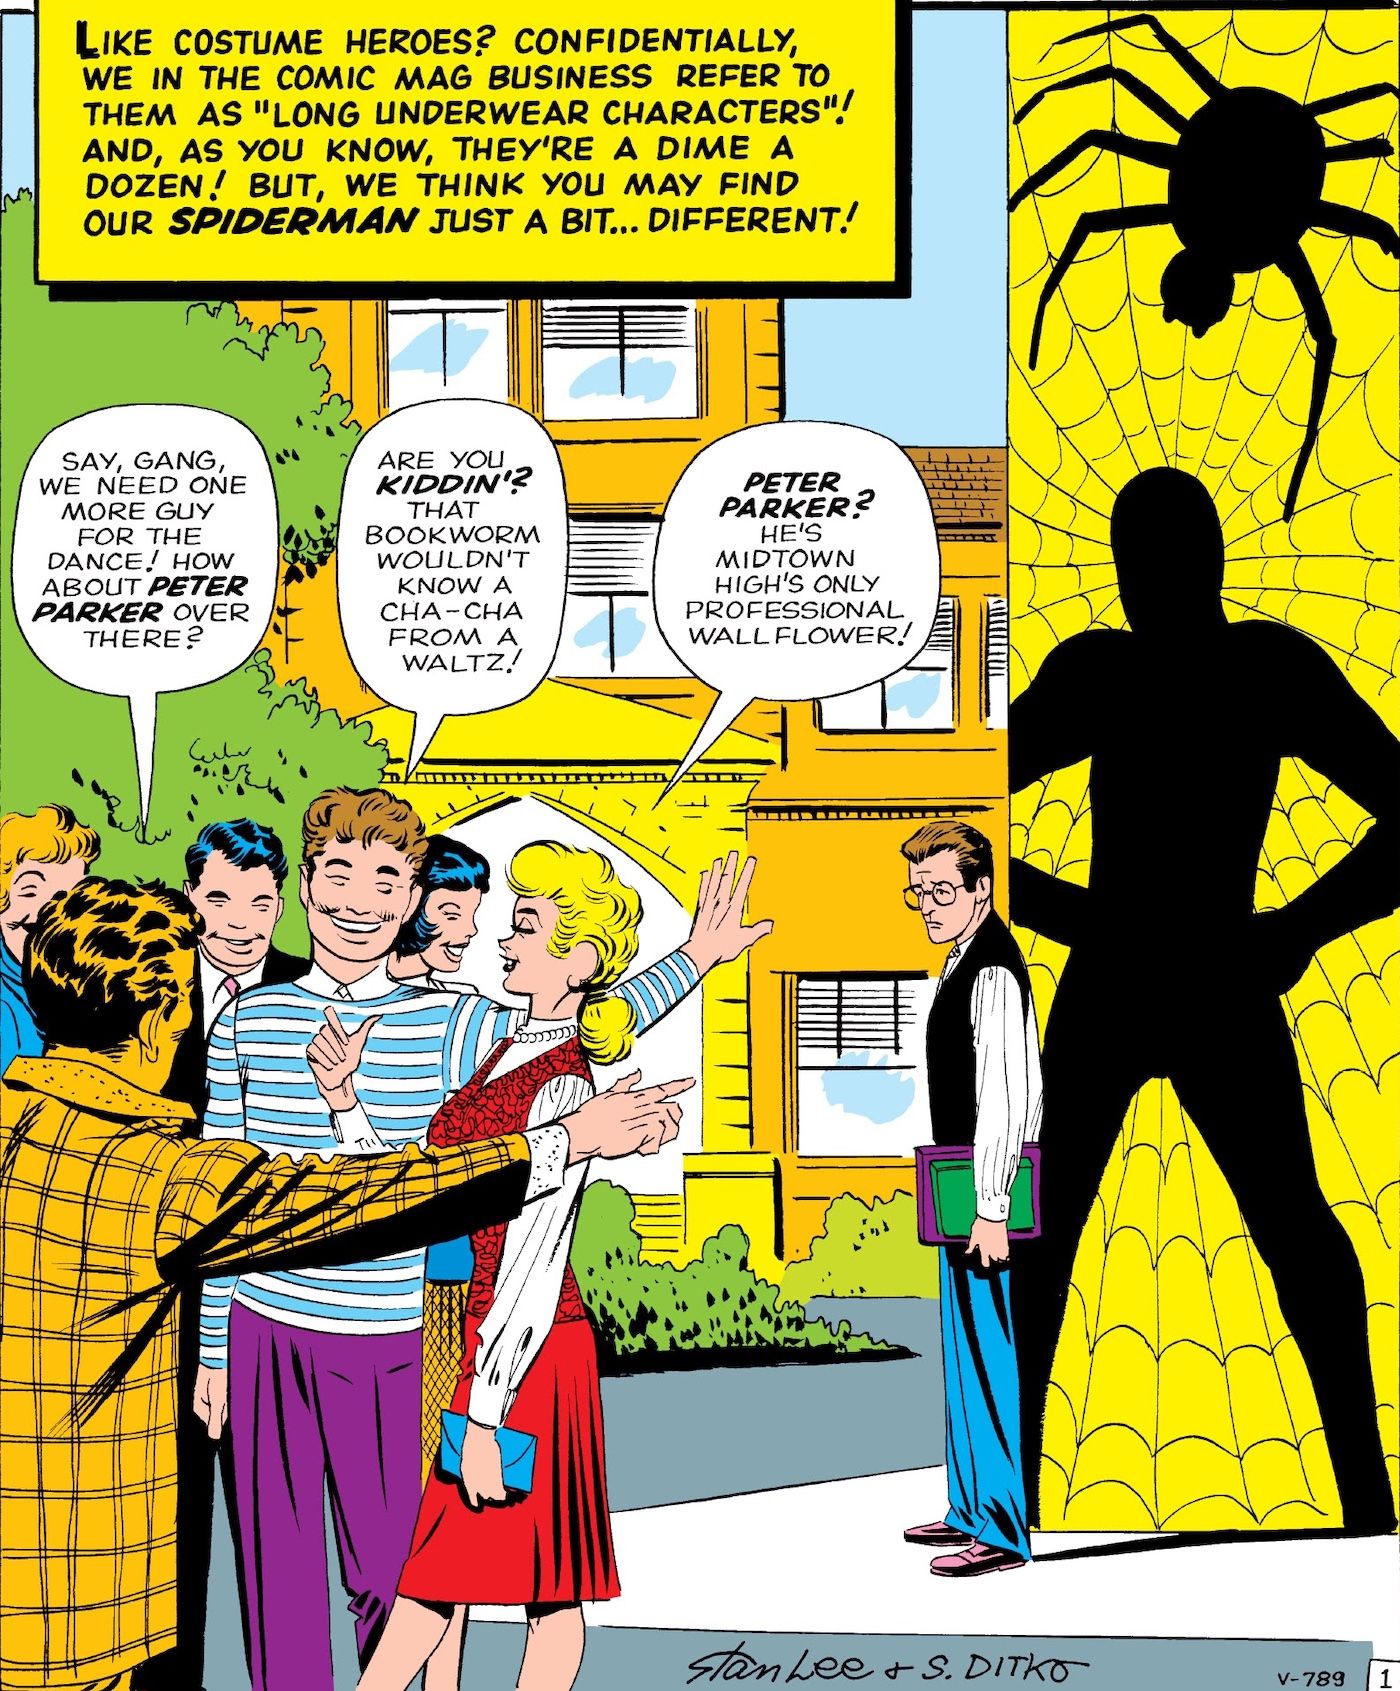 Stan Lee’s Original Spider-Man Stories Show How Marvel Can Overcome Superhero Fatigue